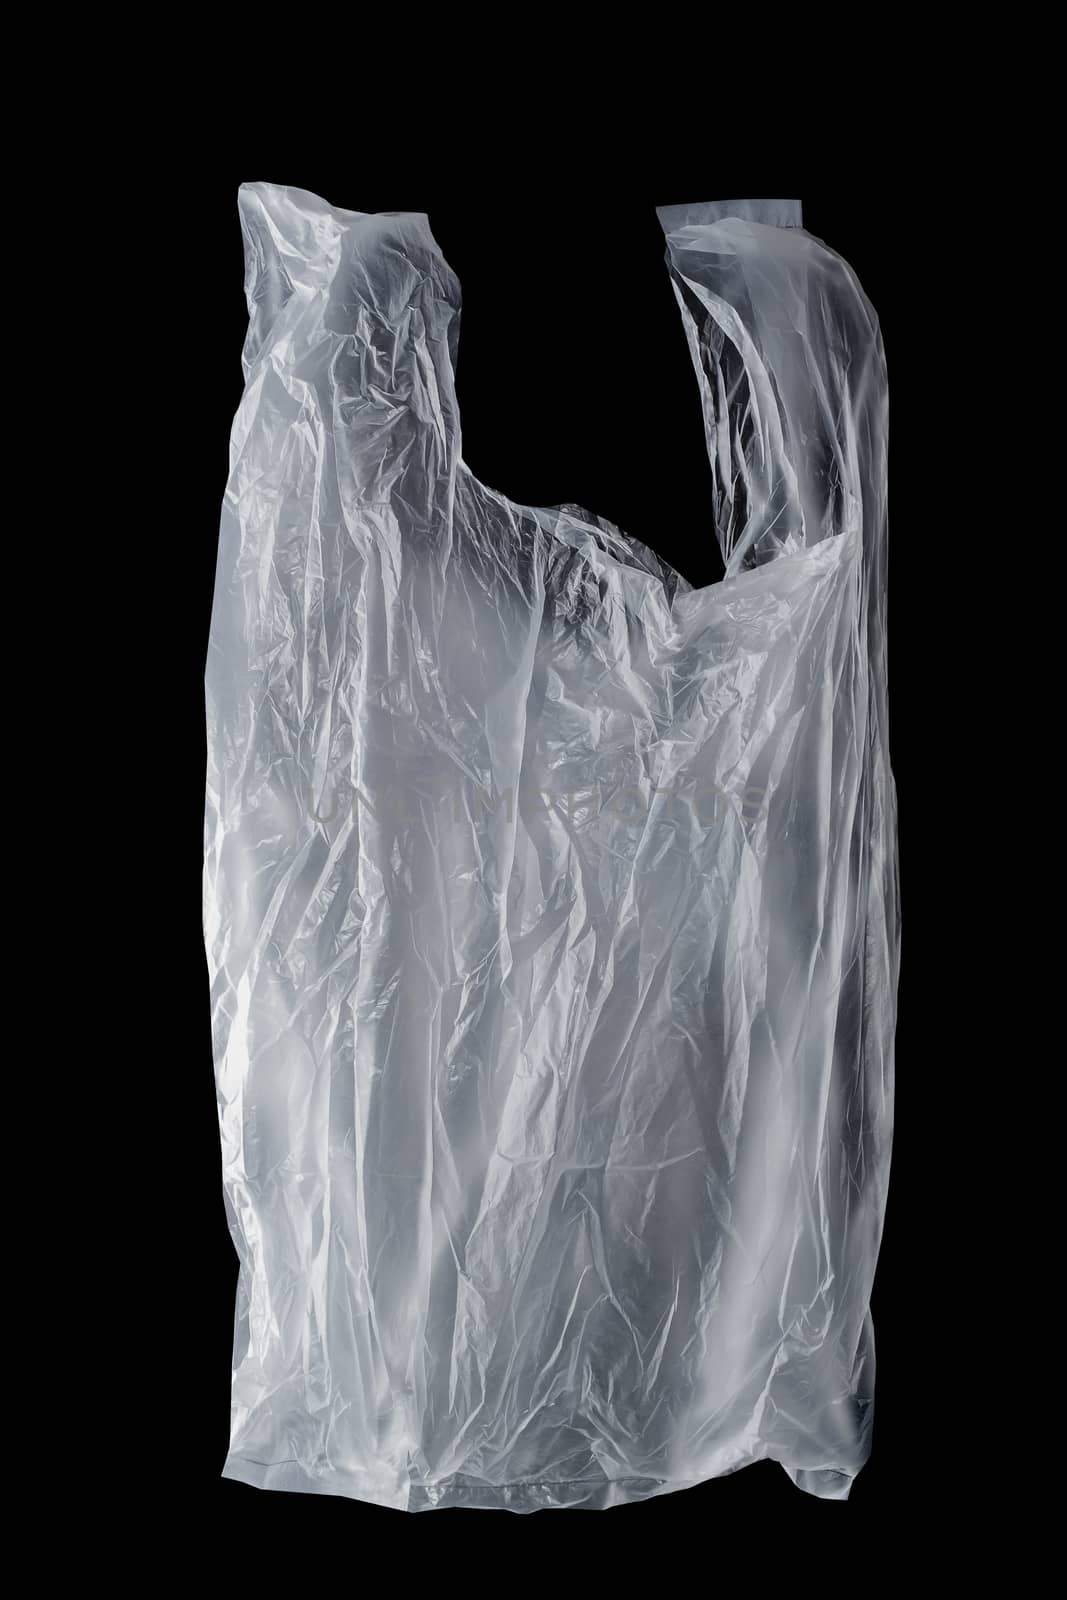 crumpled single-use plastic bag on black background, polyethylene plastic, green environment concept